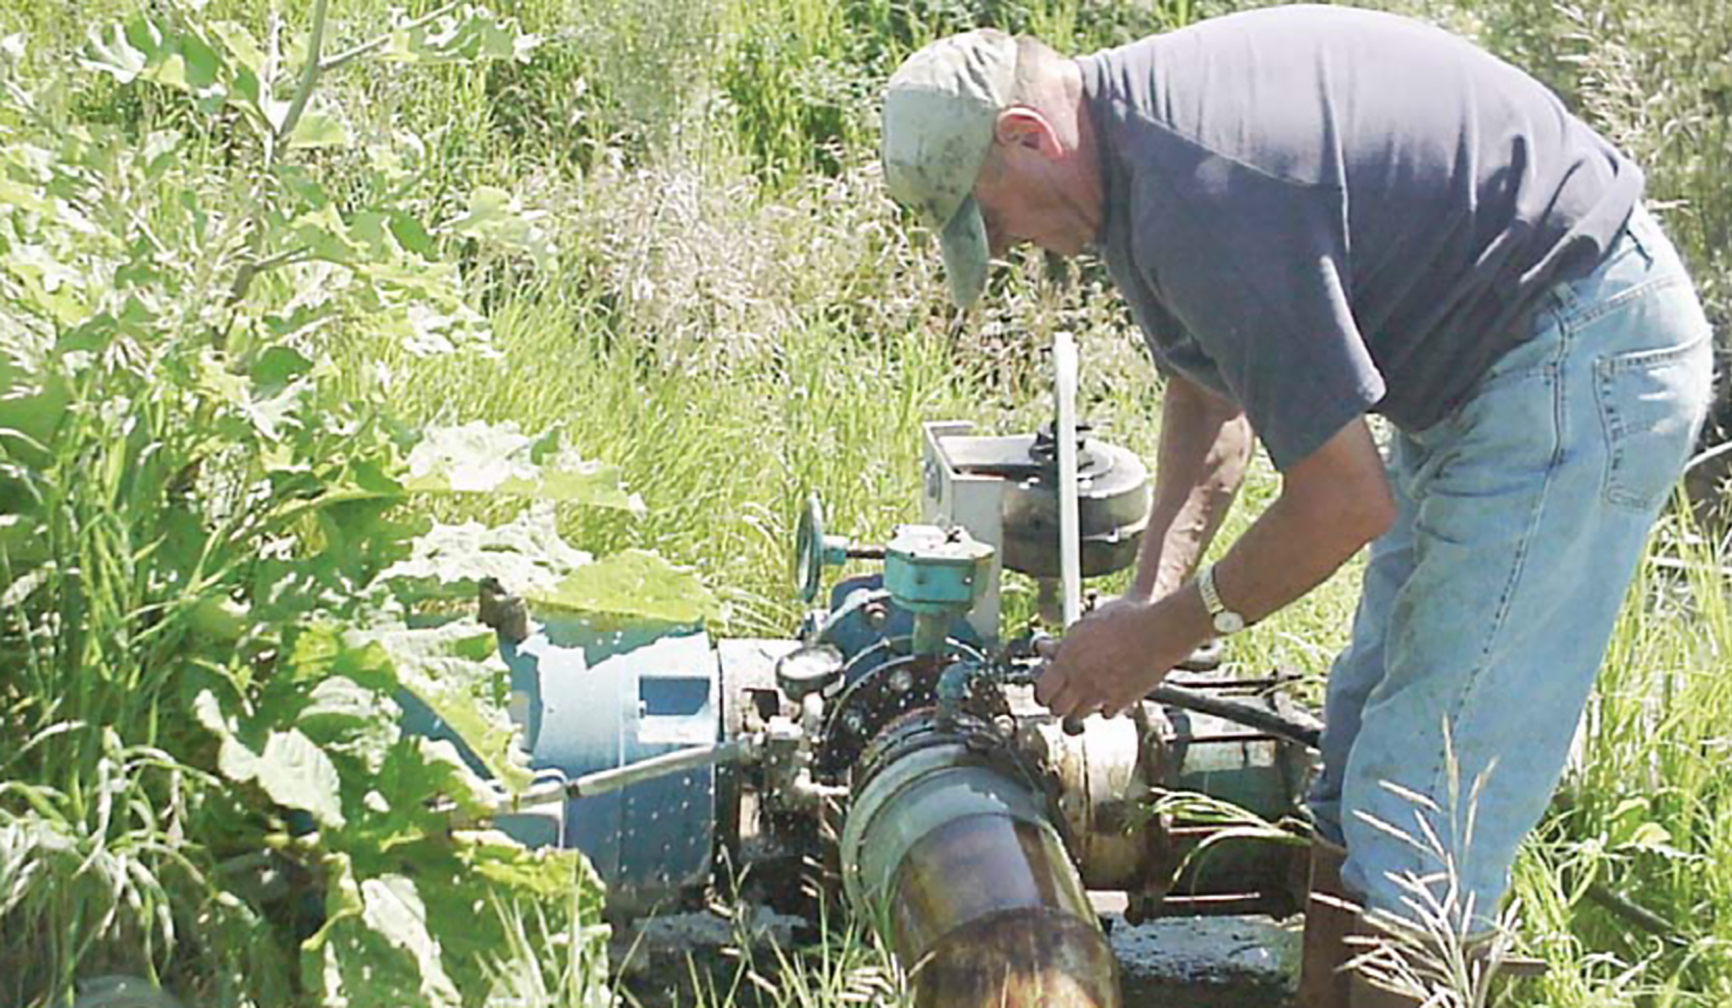 a man fixing a pump near a stream bank